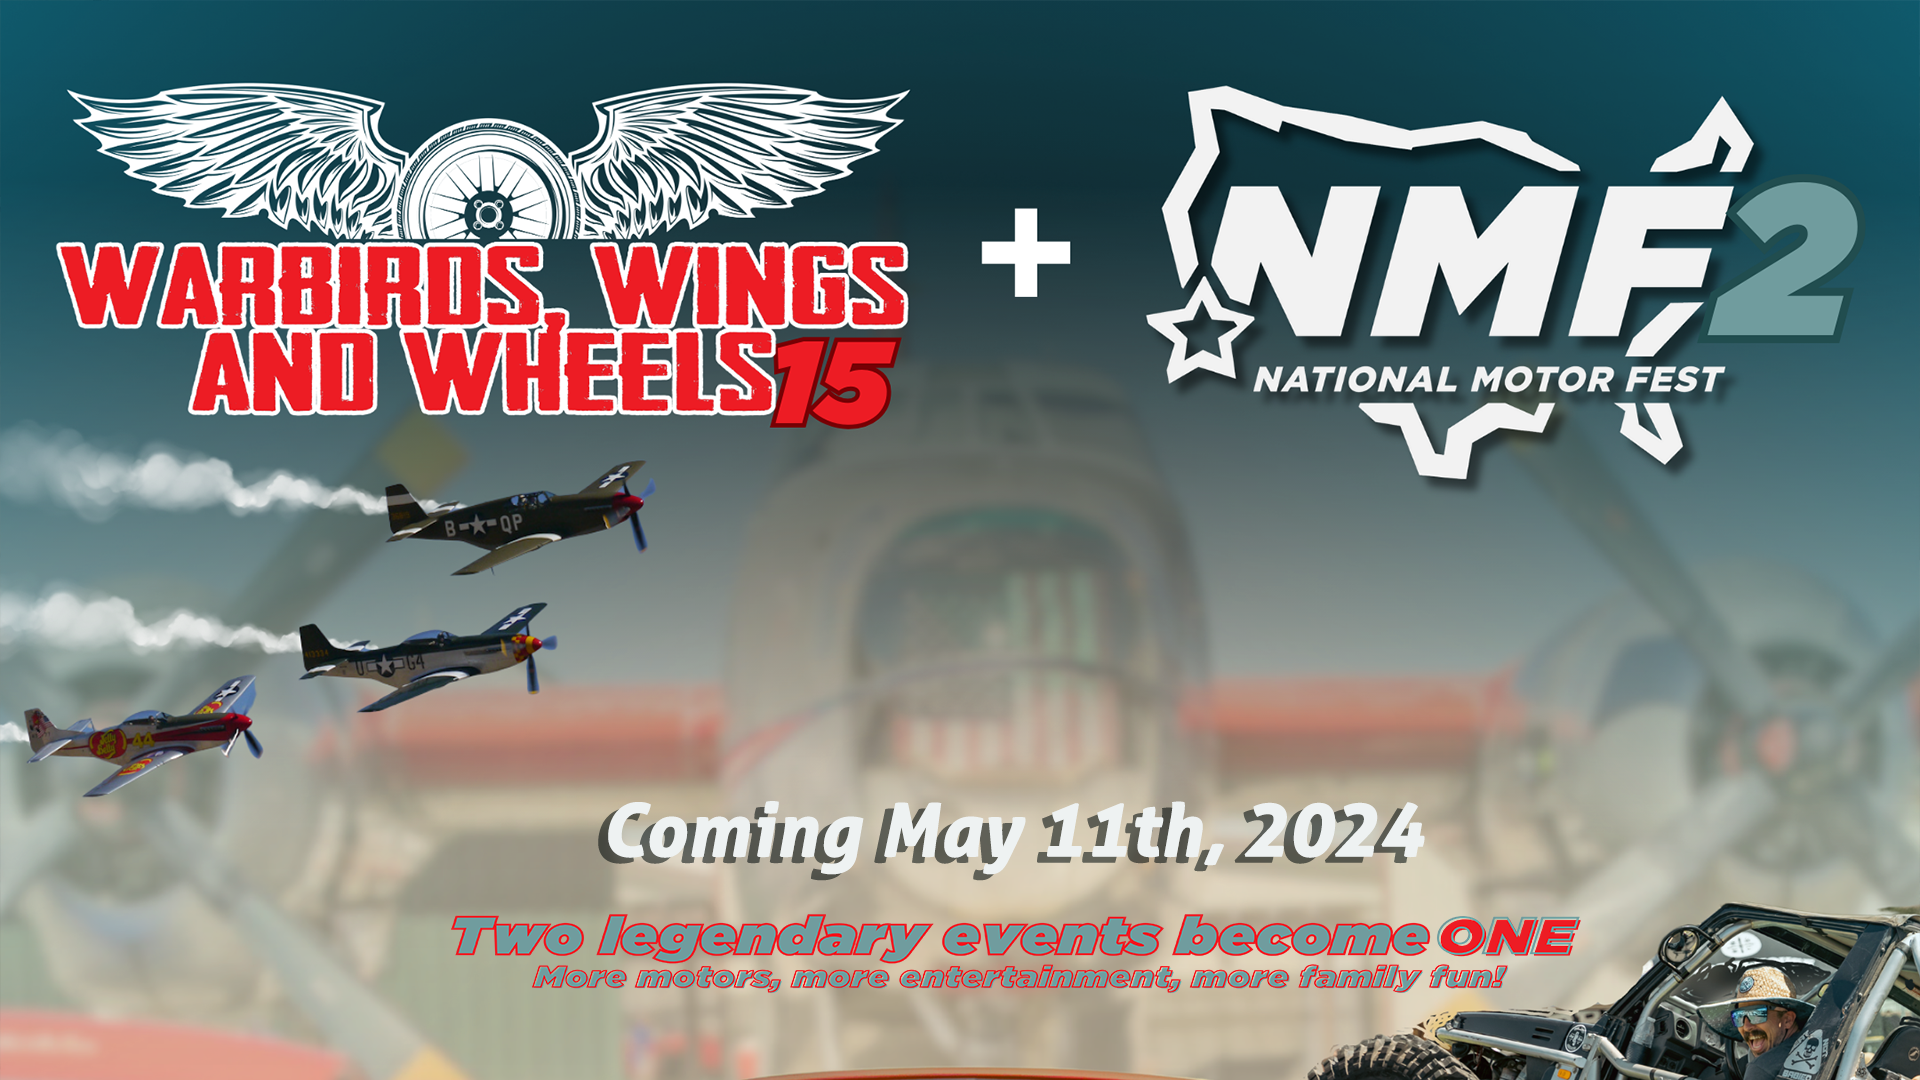 Warbirds Wings & Wheels 15 Plus National Motor Fest 2